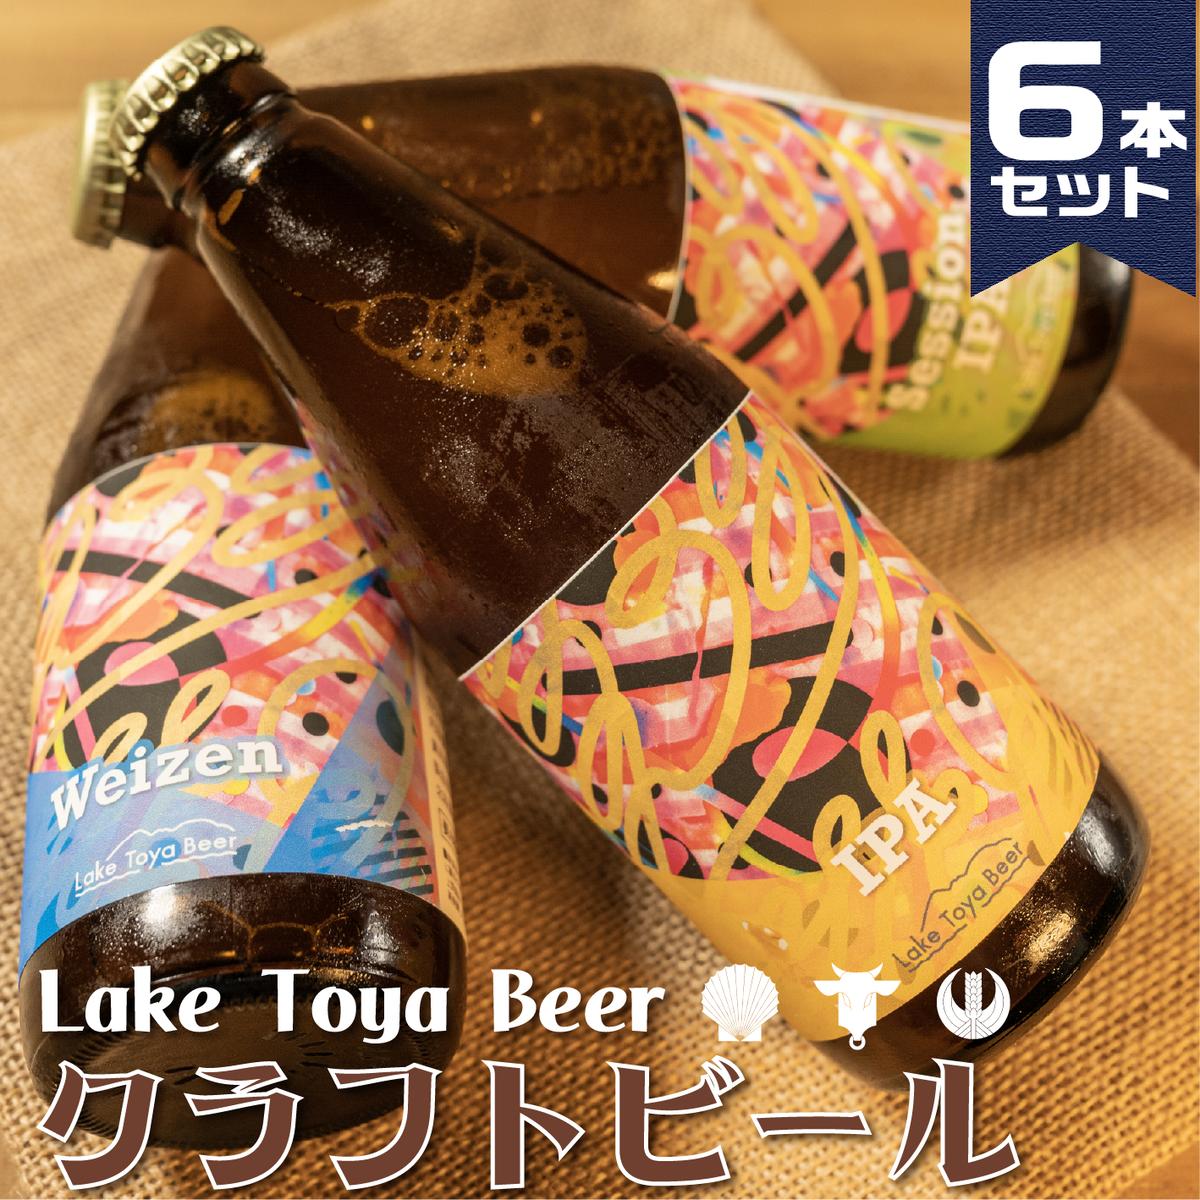 Lake Toya Beer　クラフトビール6本セット クラフトビール ビール セット 地ビール 酒 発泡酒 洞爺湖